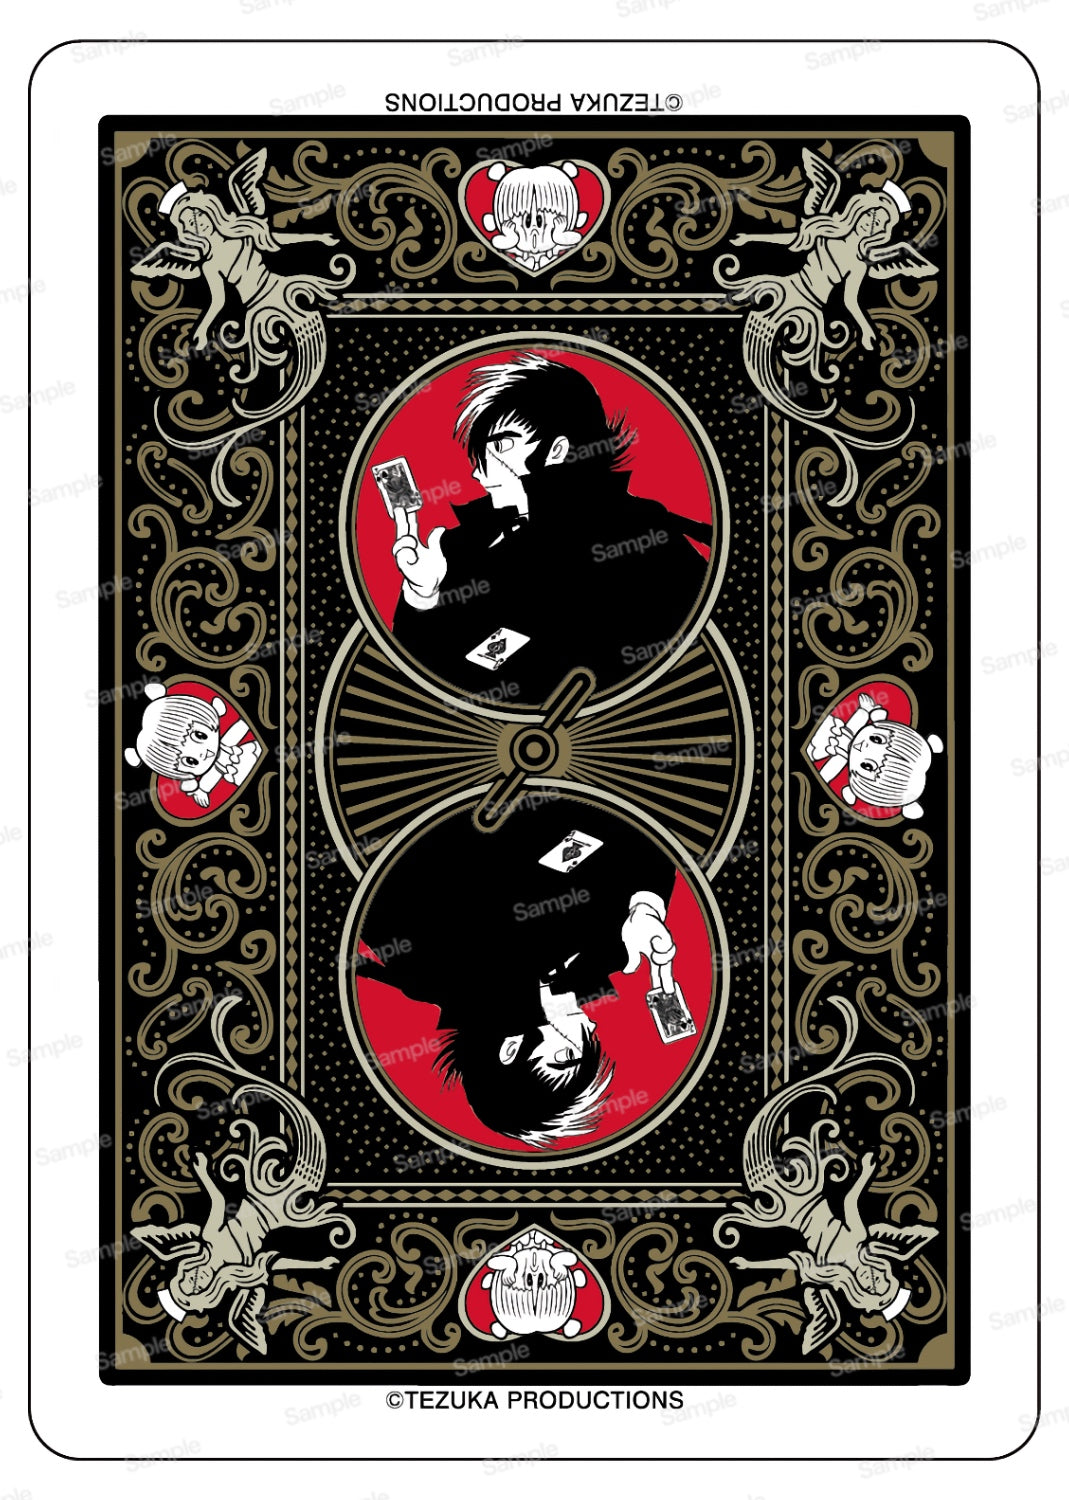 Bicycle Osamu Tezuka Black Jack Playing Cards Japan